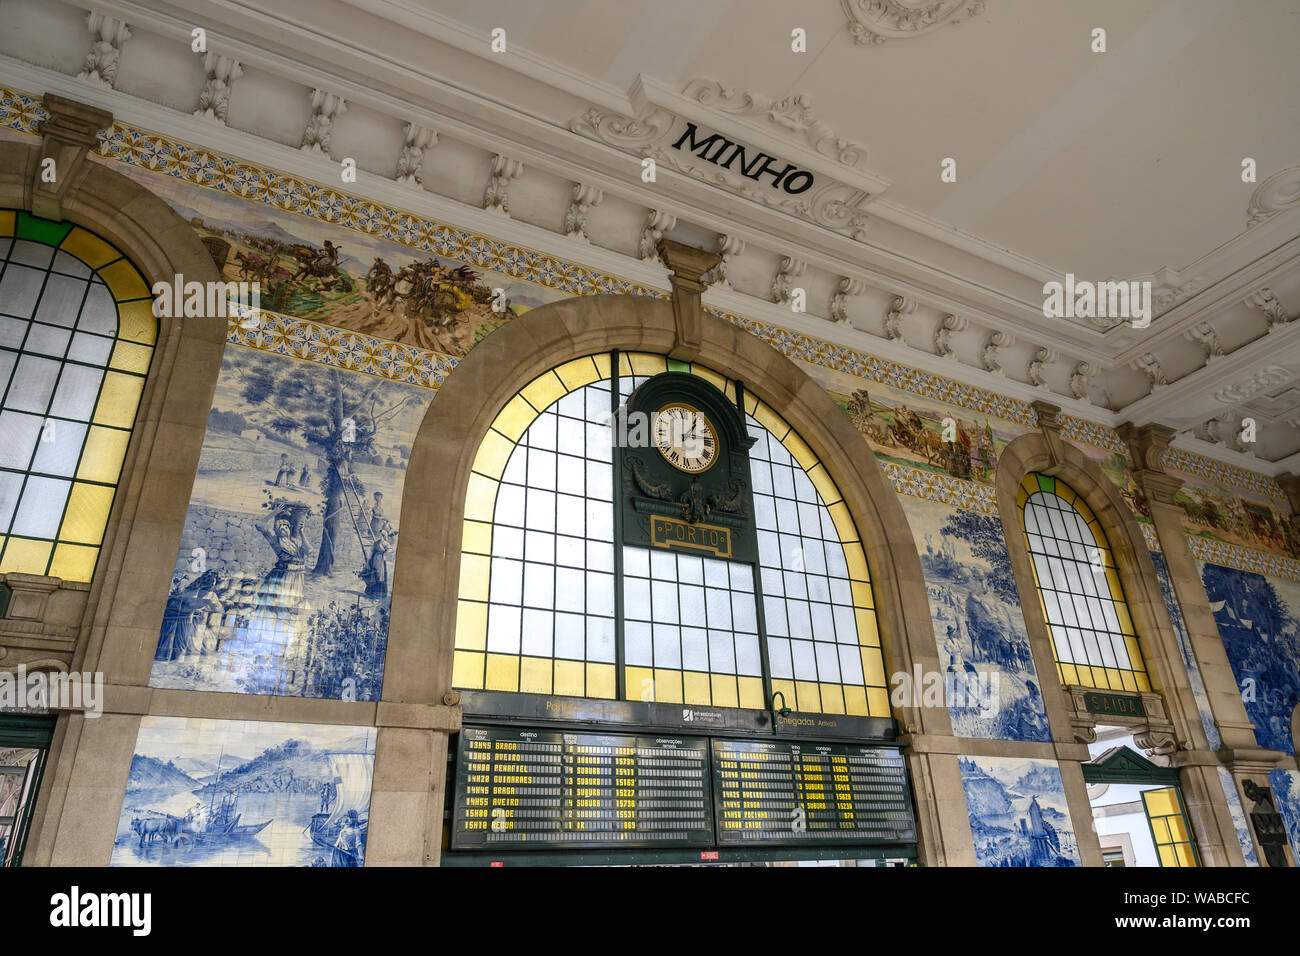 PORTO, PORTUGAL - APRIL 8, 2019: Porto Portugal inside Sao Bento station with Mural Artwork Stock Photo